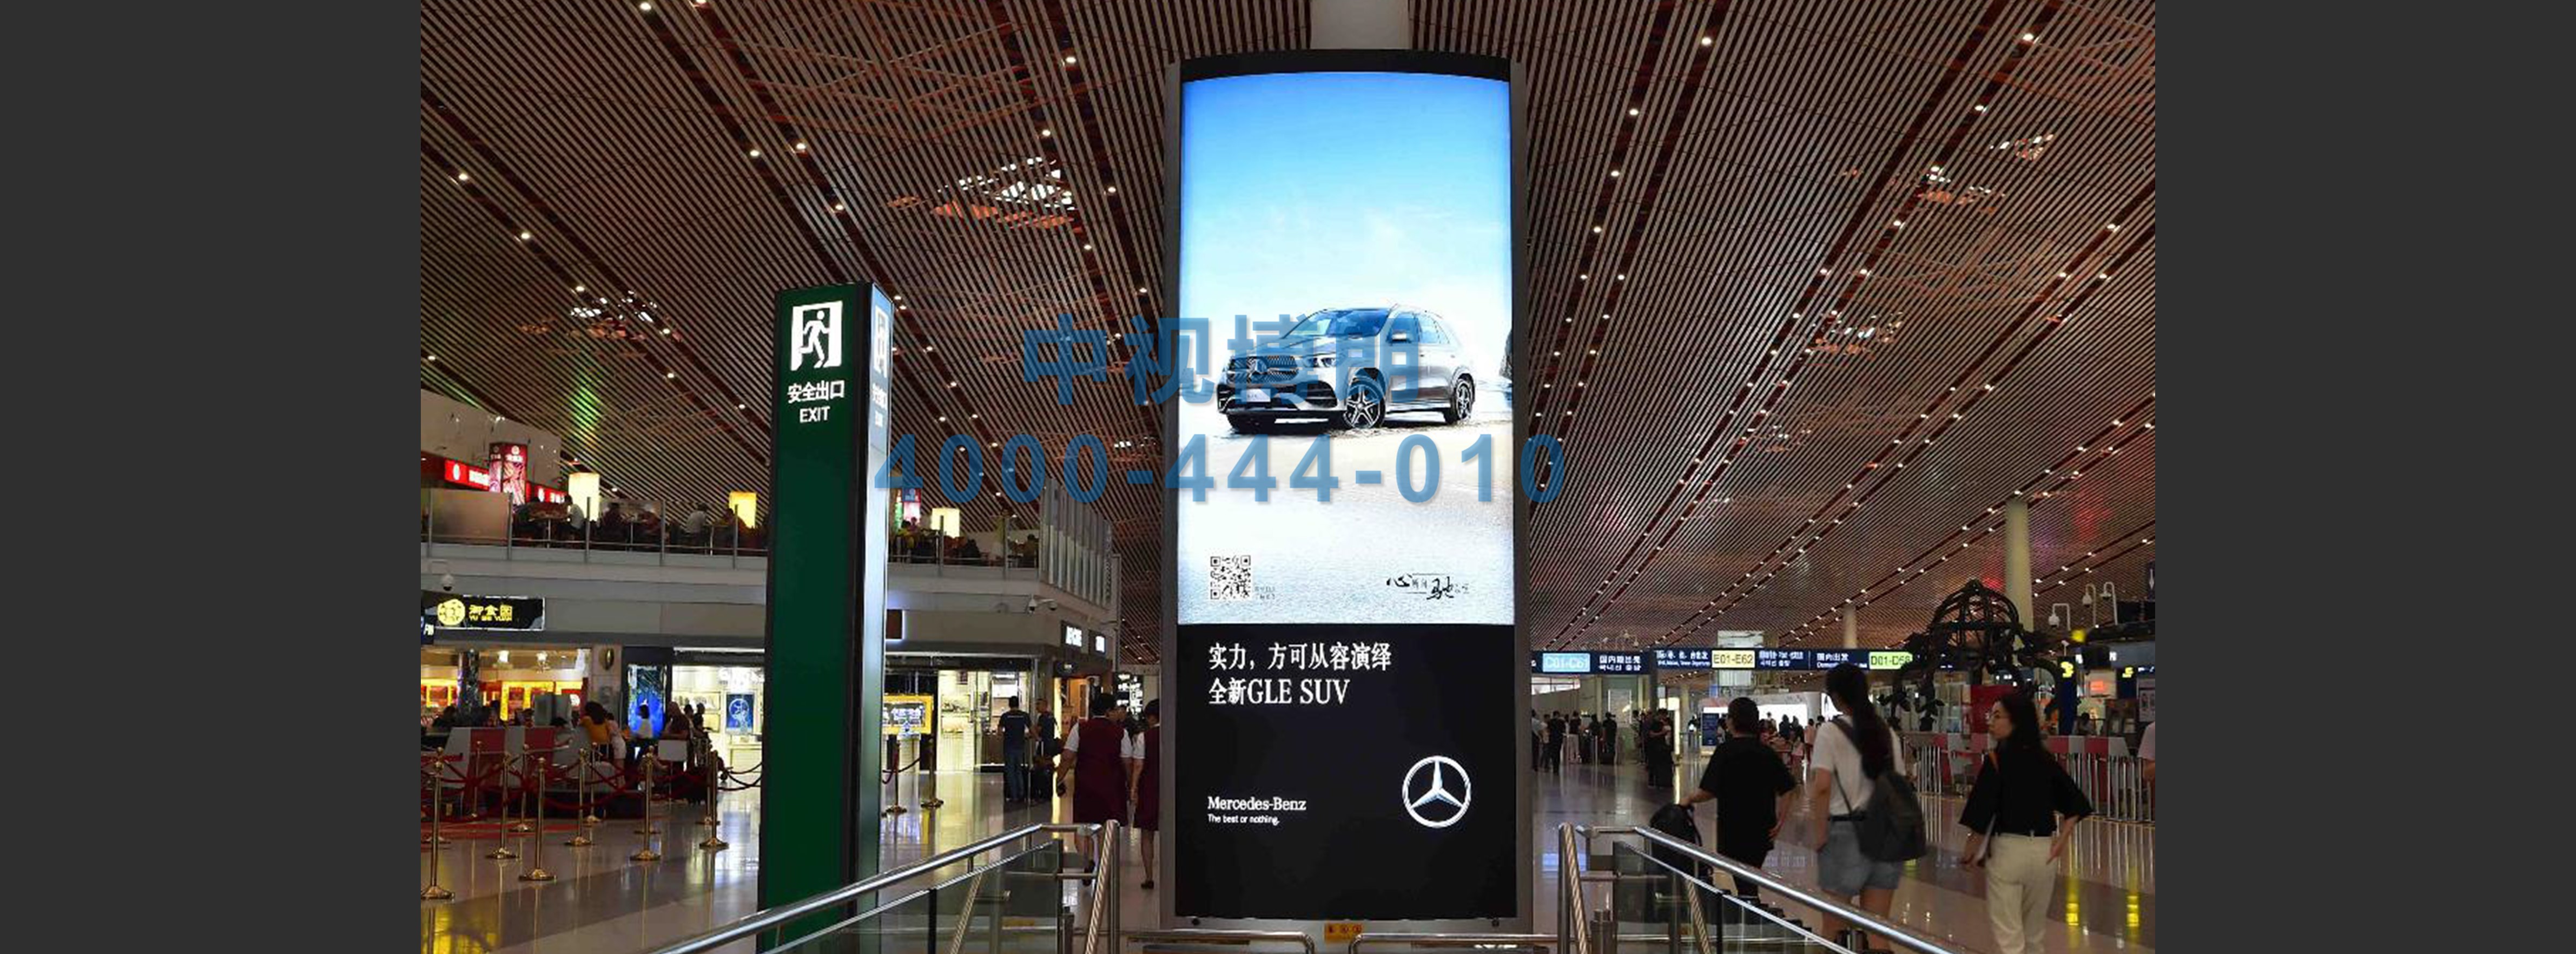 北京首都机场广告-T3 Departure Hall Totem Lightbox J019